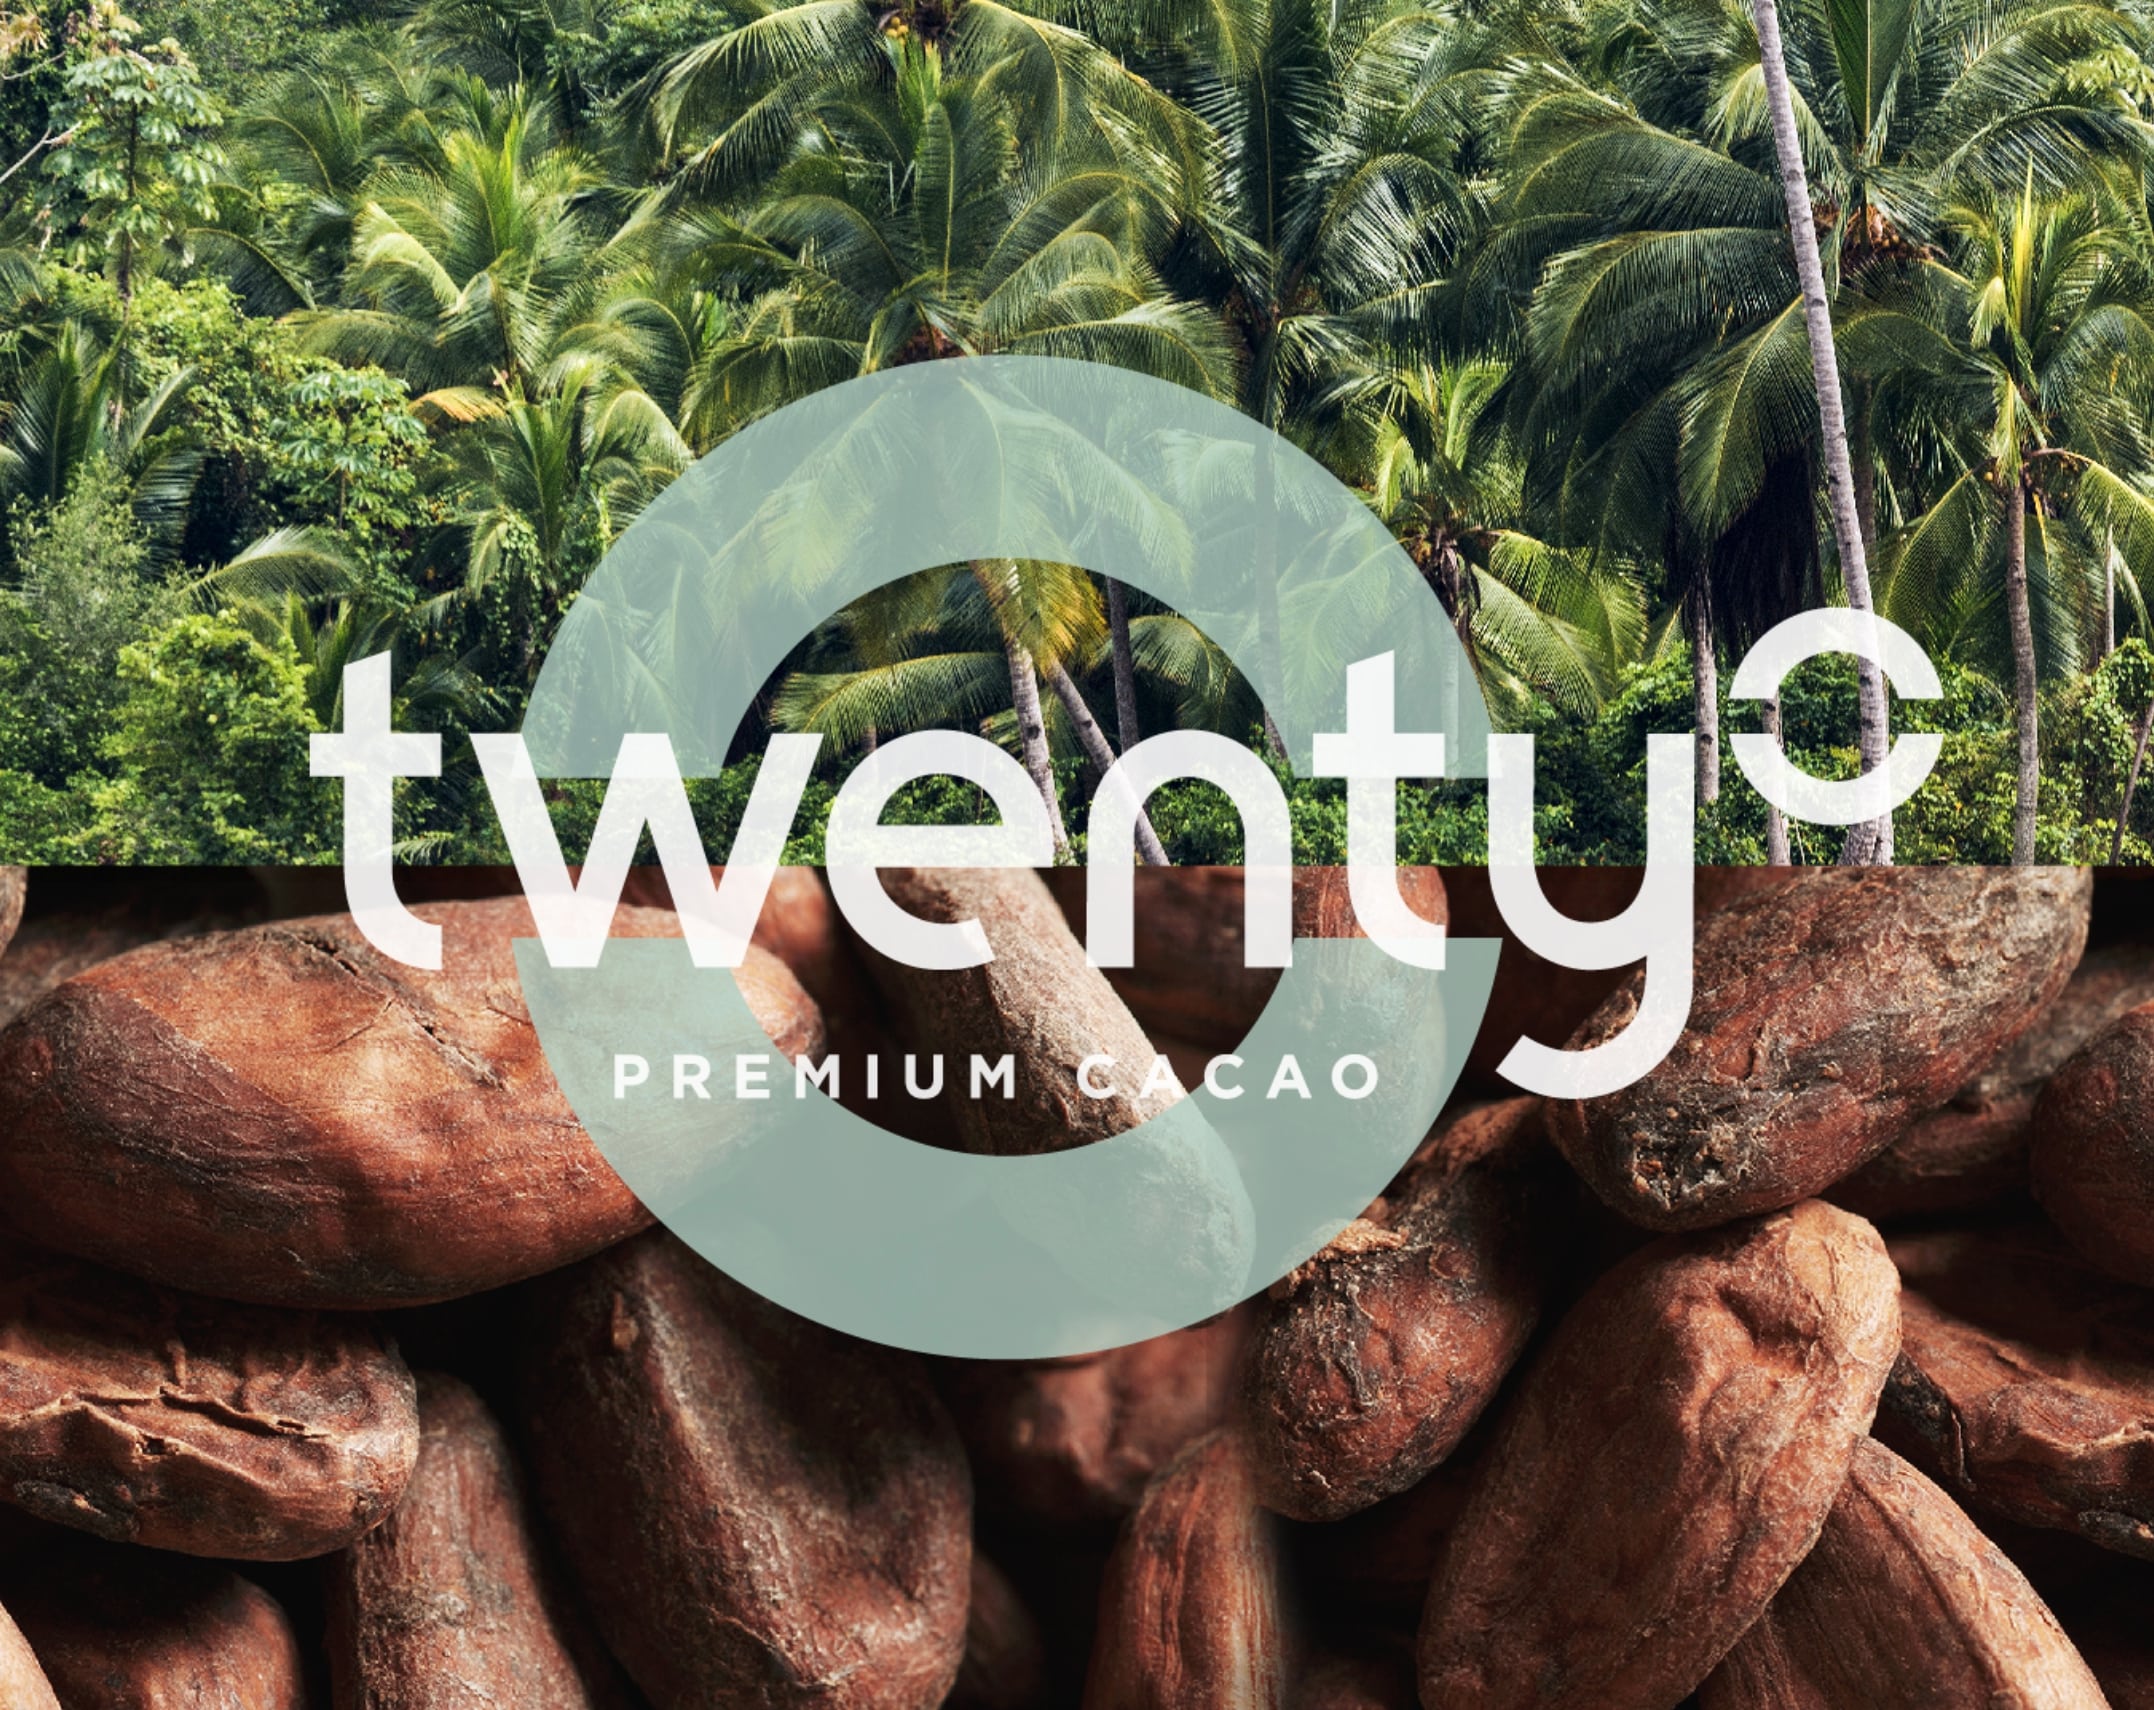 Twenty premium cocoa logo with palm trees and roasted cocoa